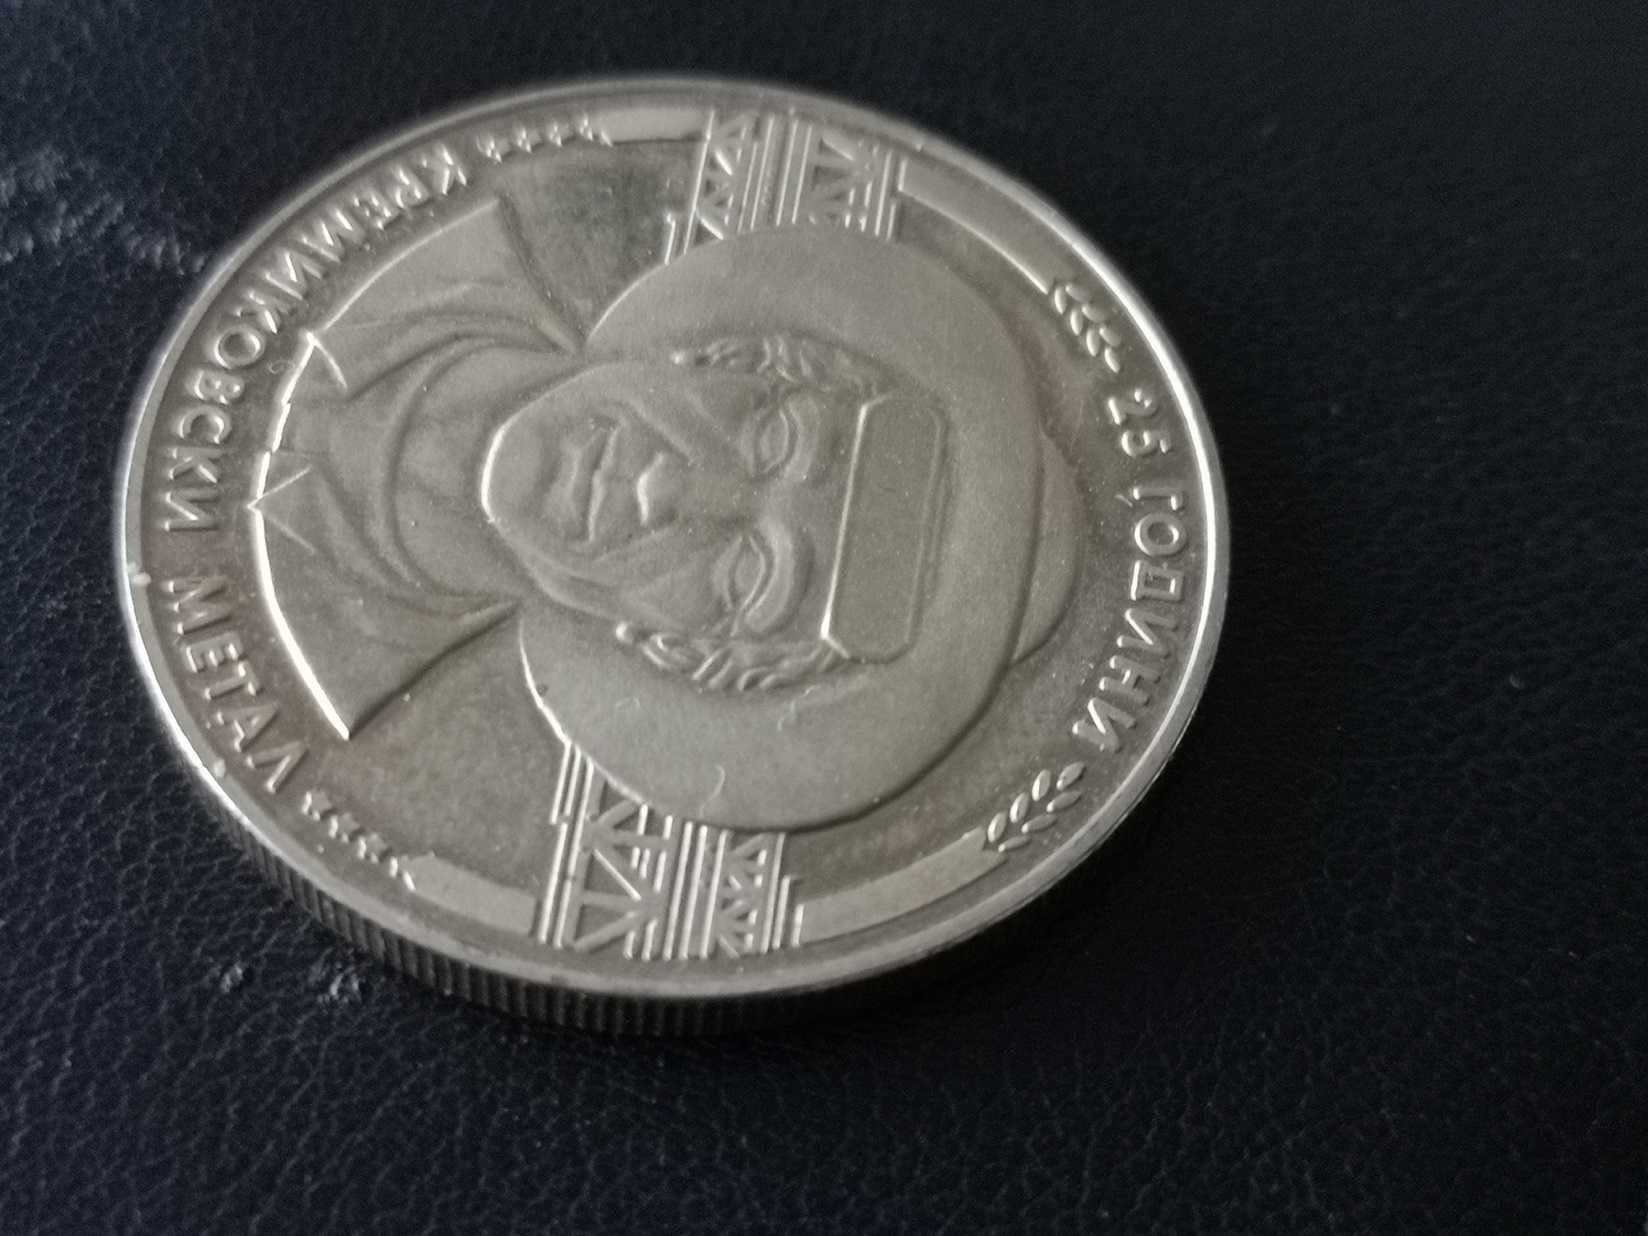 Сребърни БГ монети 100 лв и 25 год. кремиковски метал мед - никел